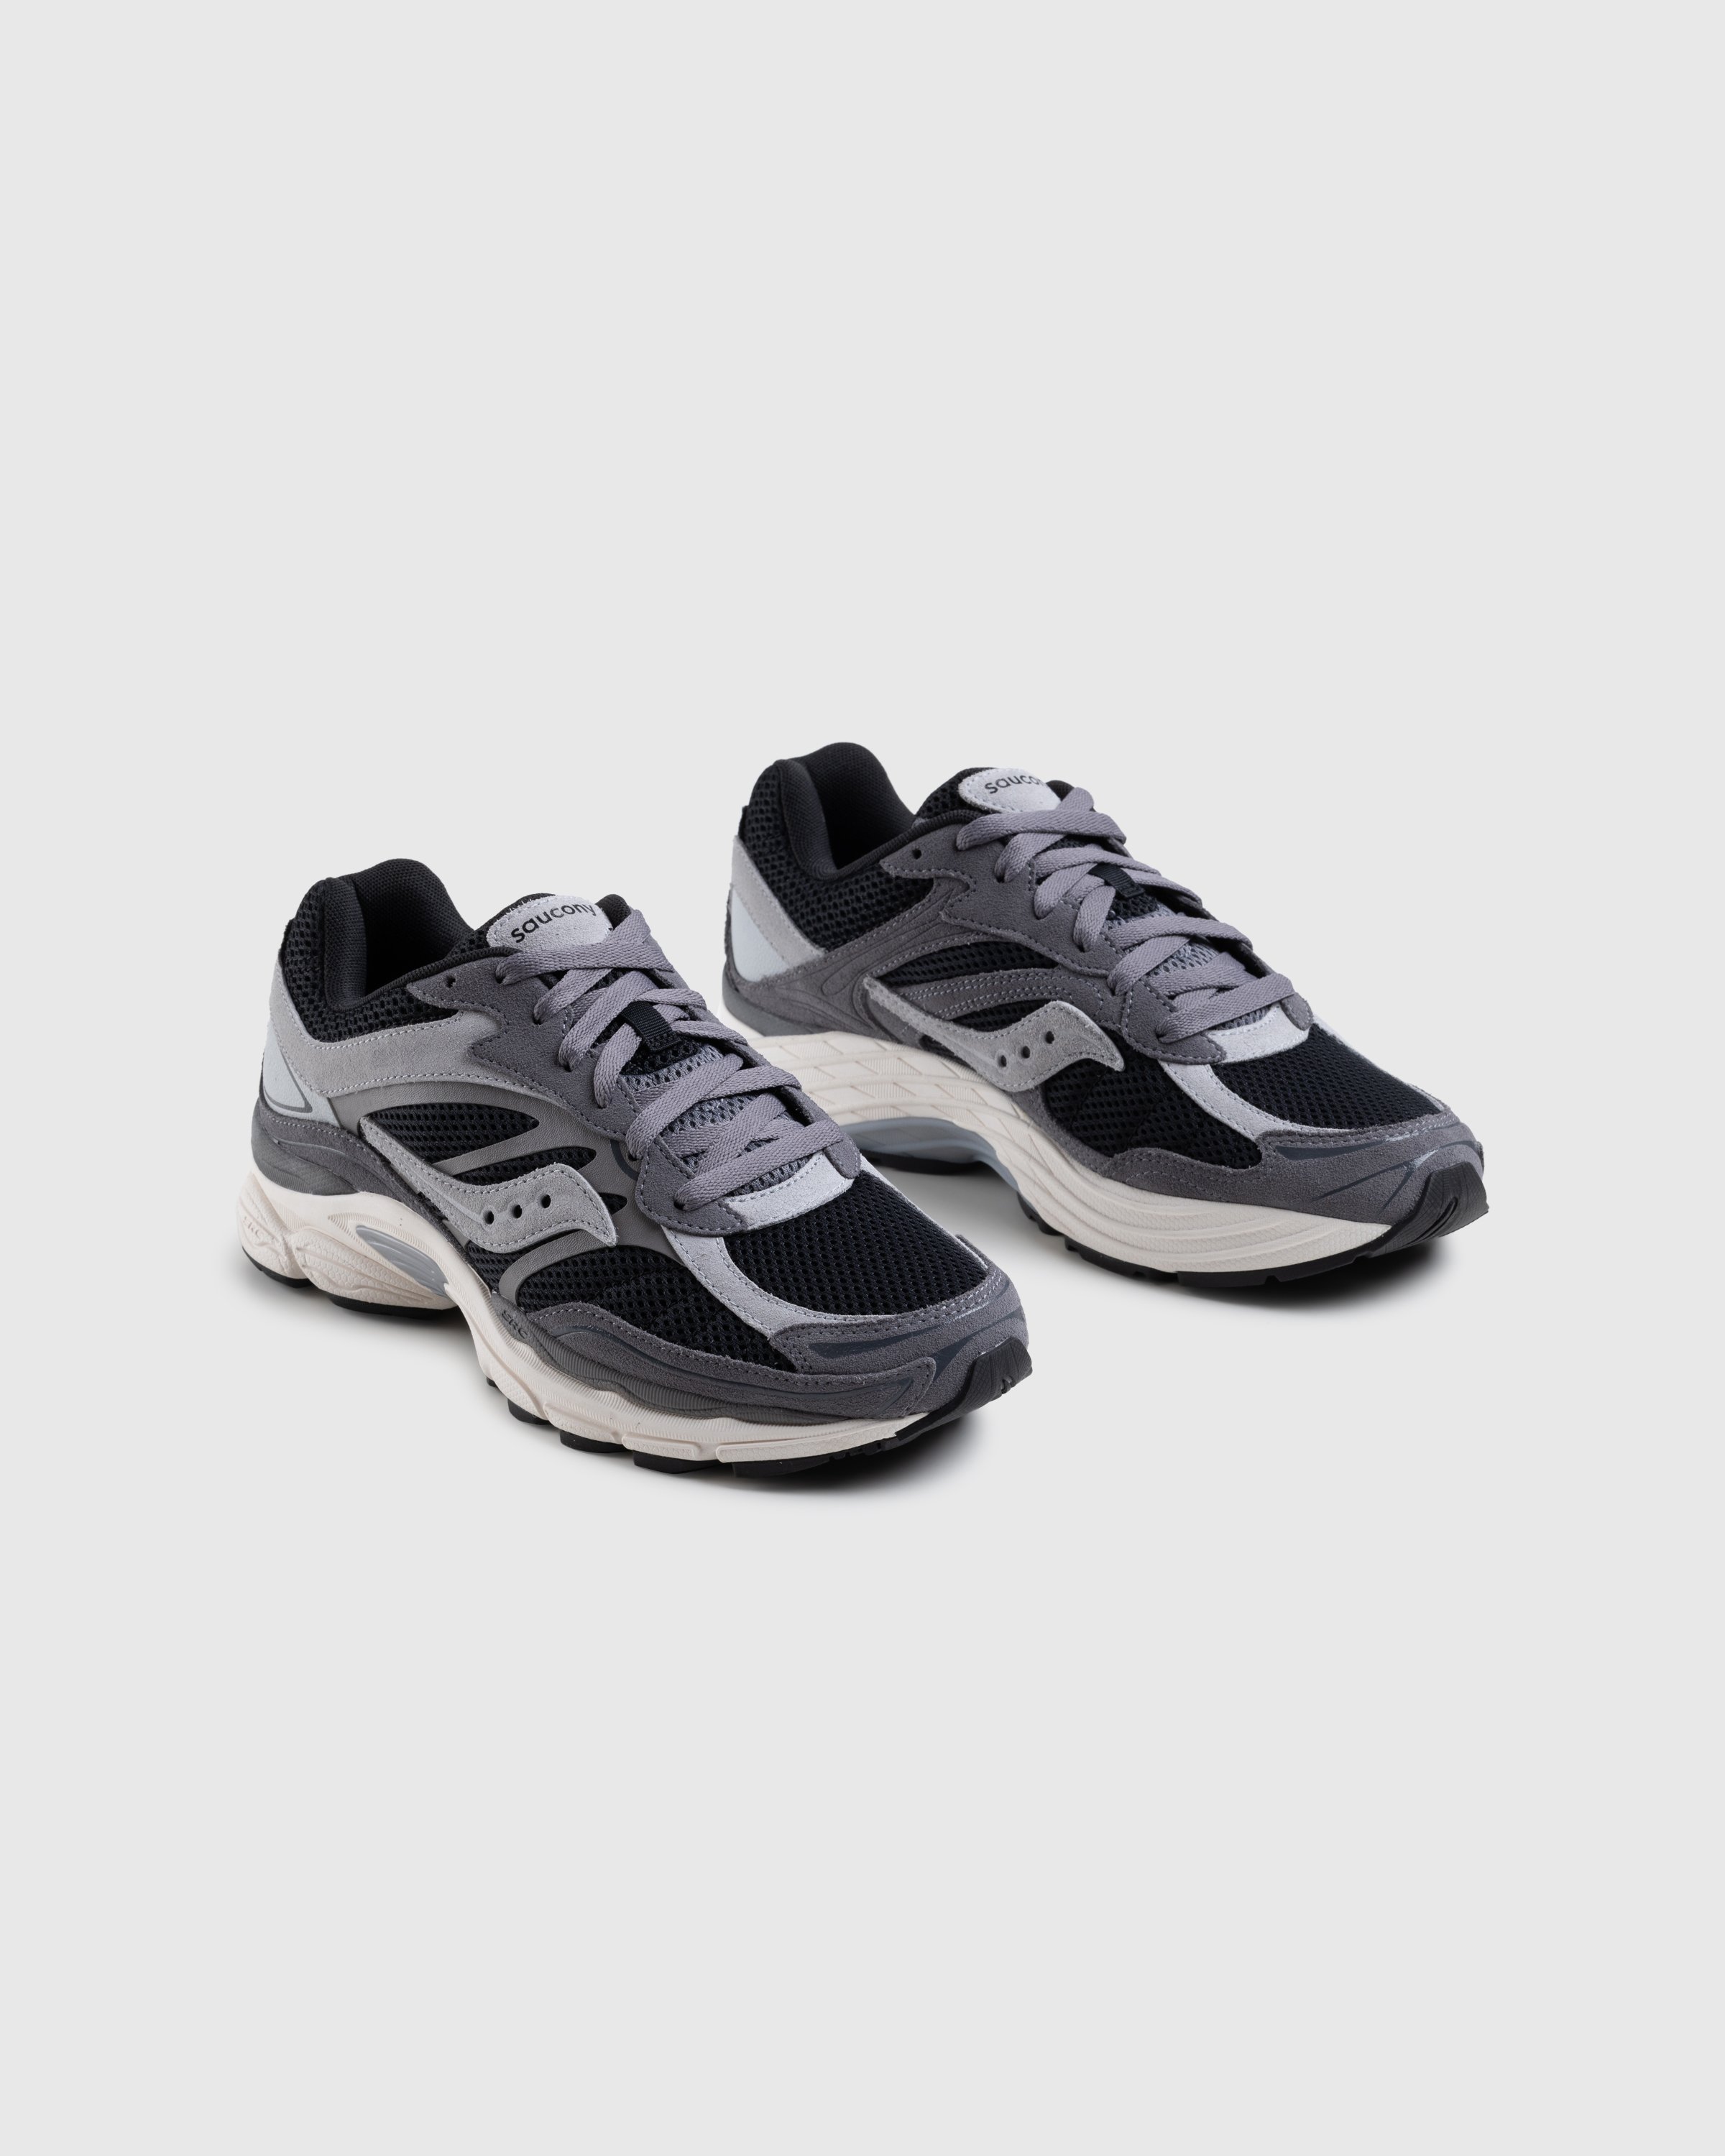 Saucony - ProGrid Omni 9 Premium Gray/Black - Footwear - Grey - Image 3